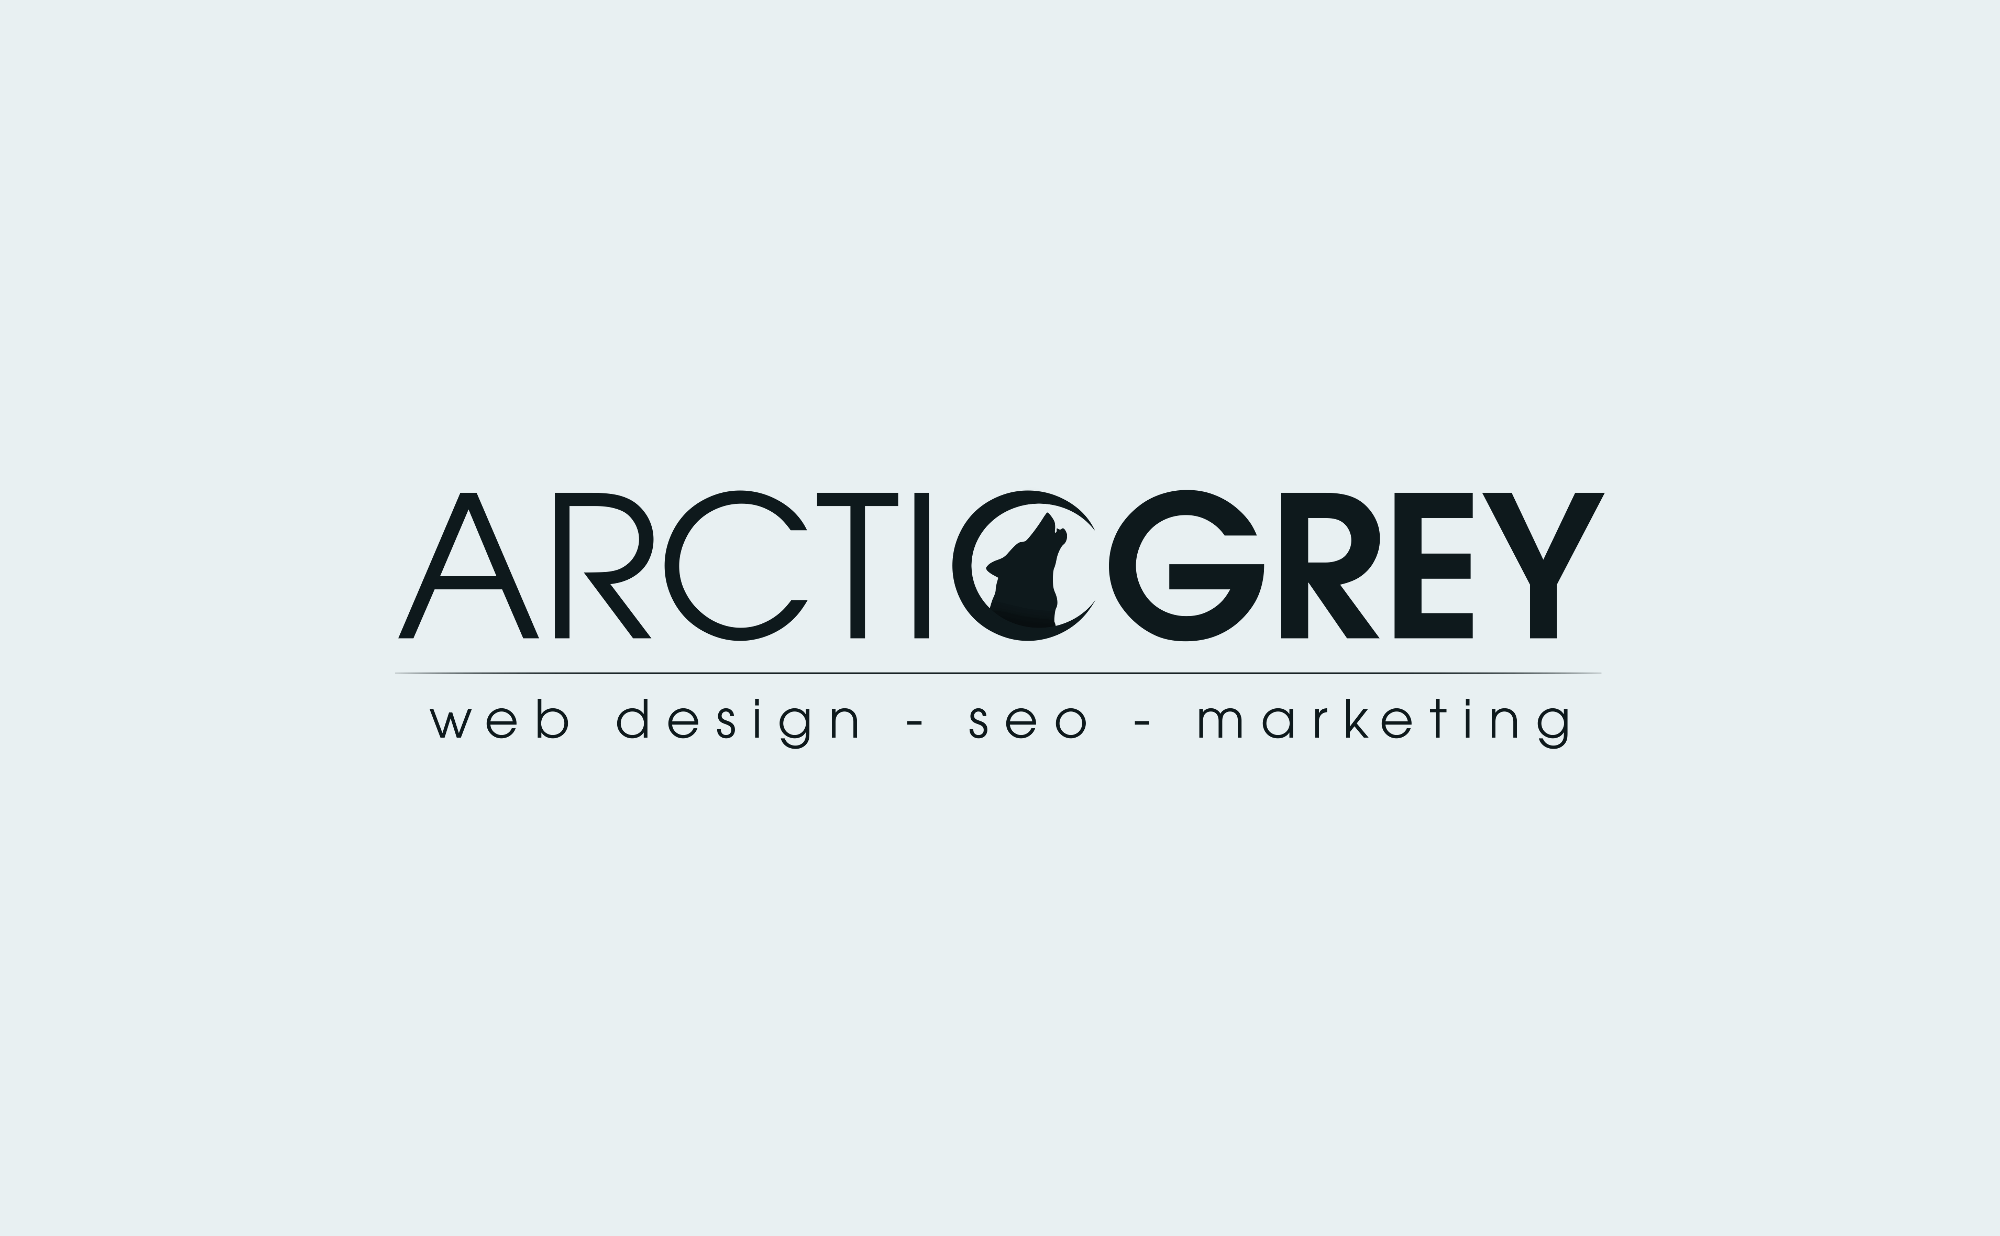 Best Shopify Development Agency Logo: Arctic Grey Inc